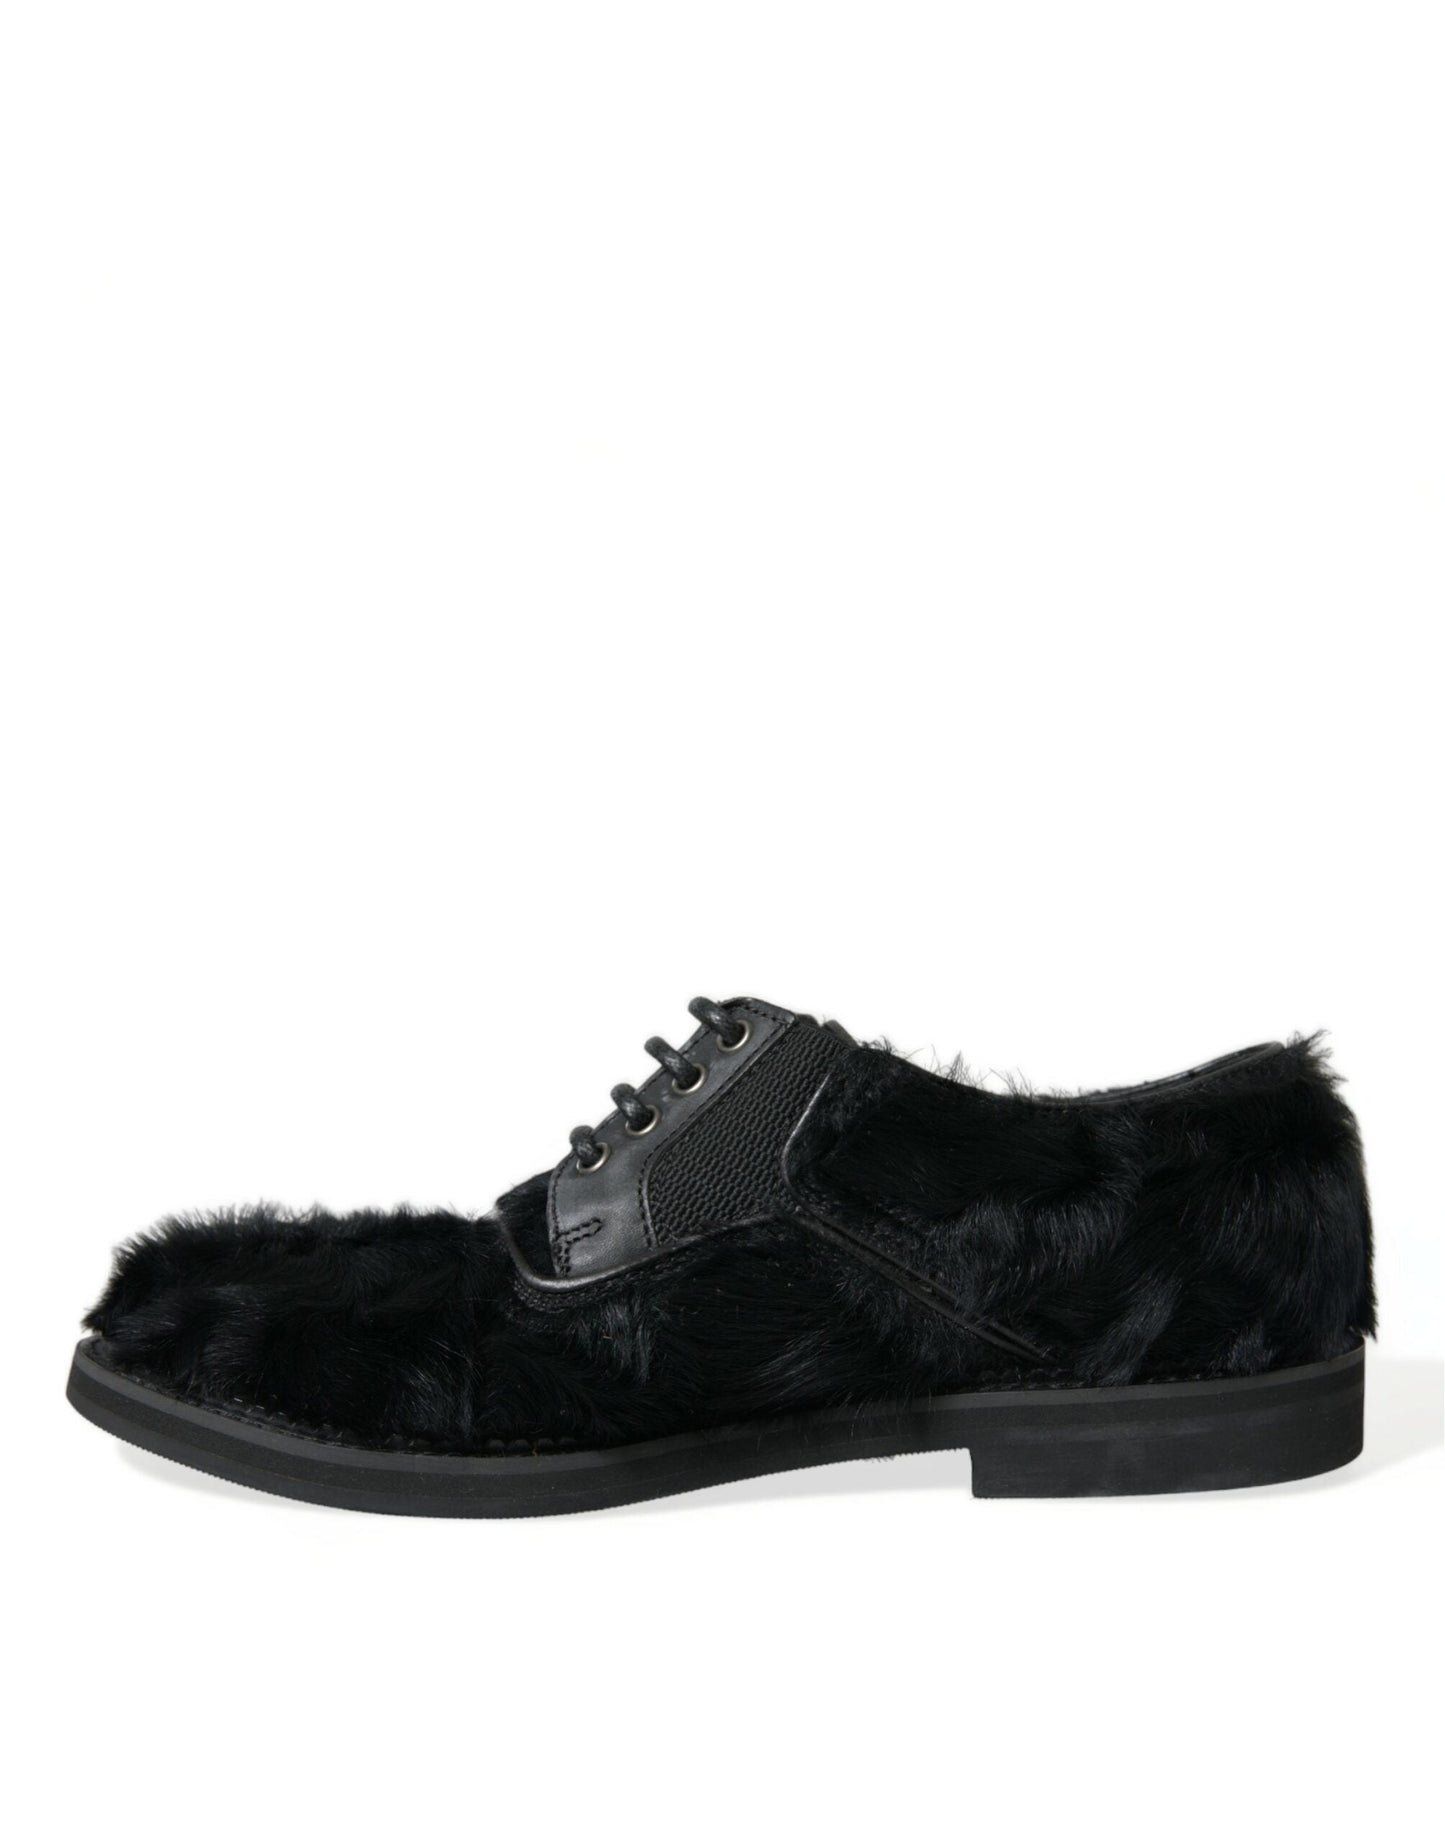 Fashionsarah.com Fashionsarah.com Dolce & Gabbana Black Fur Leather Lace Up Derby Dress Shoes